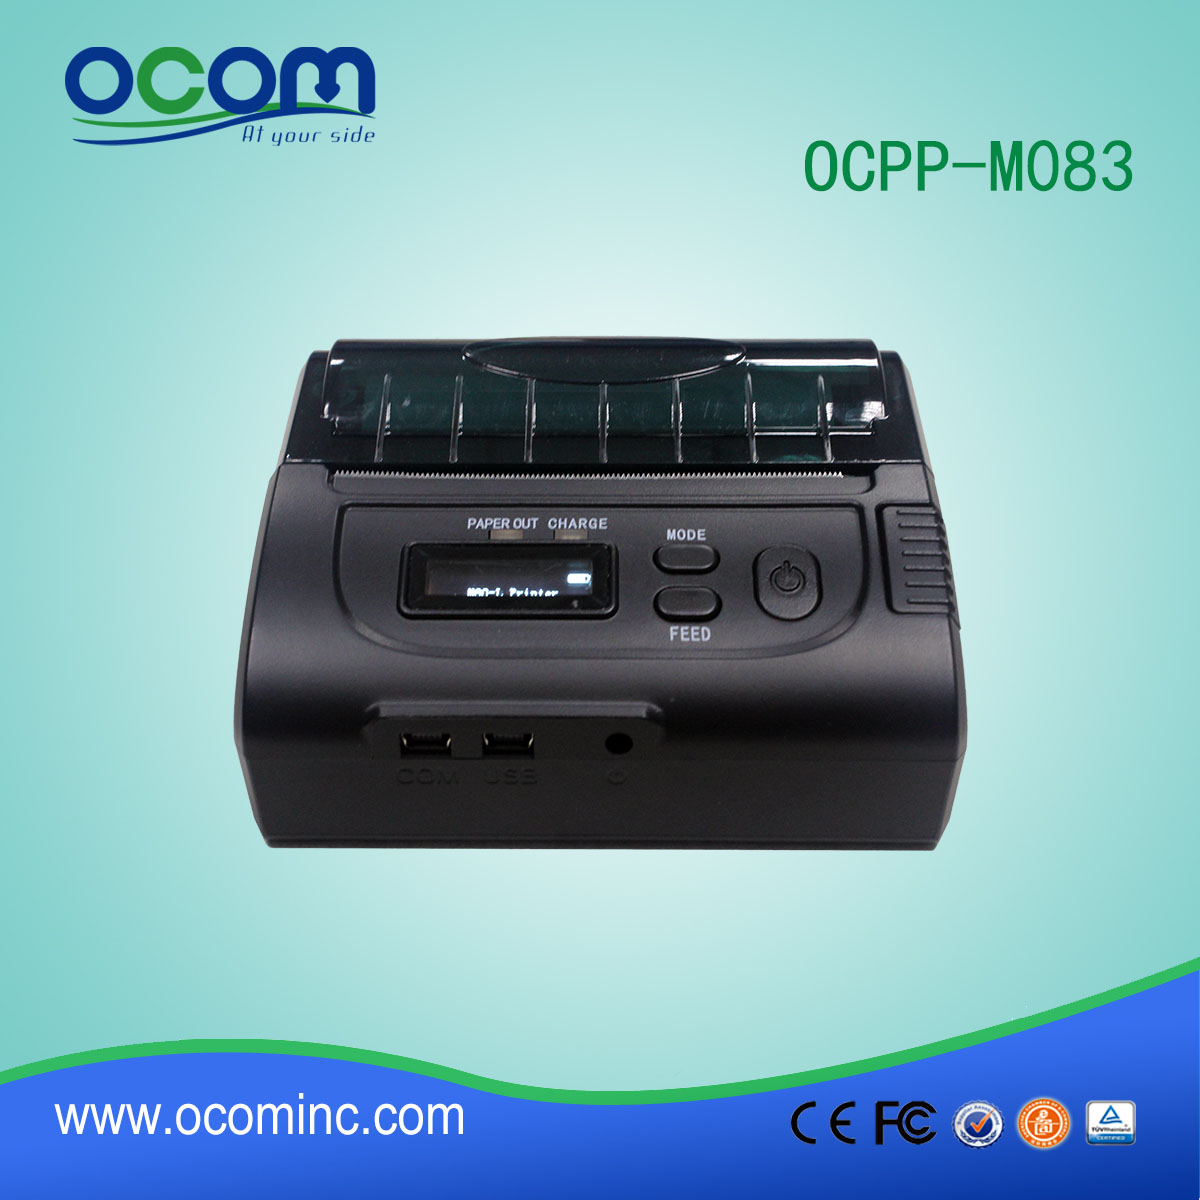 80mm Bluetooth Thermal Mini Drucker Pos Empfangsdrucker OCPP-M083